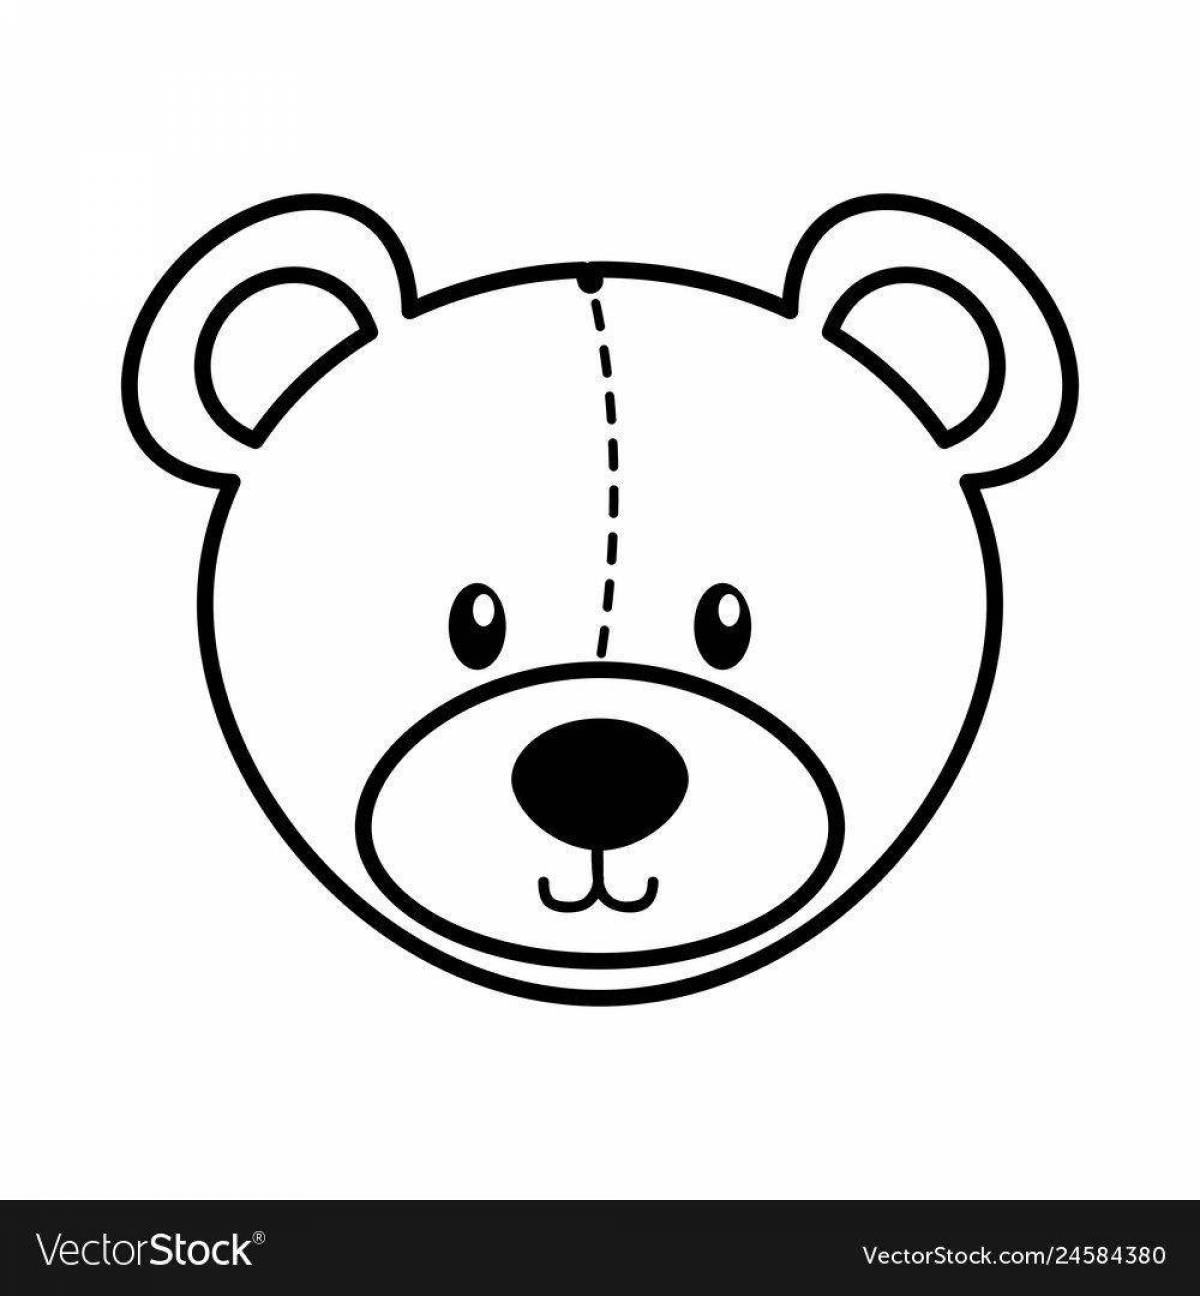 Bear muzzle huggable coloring page